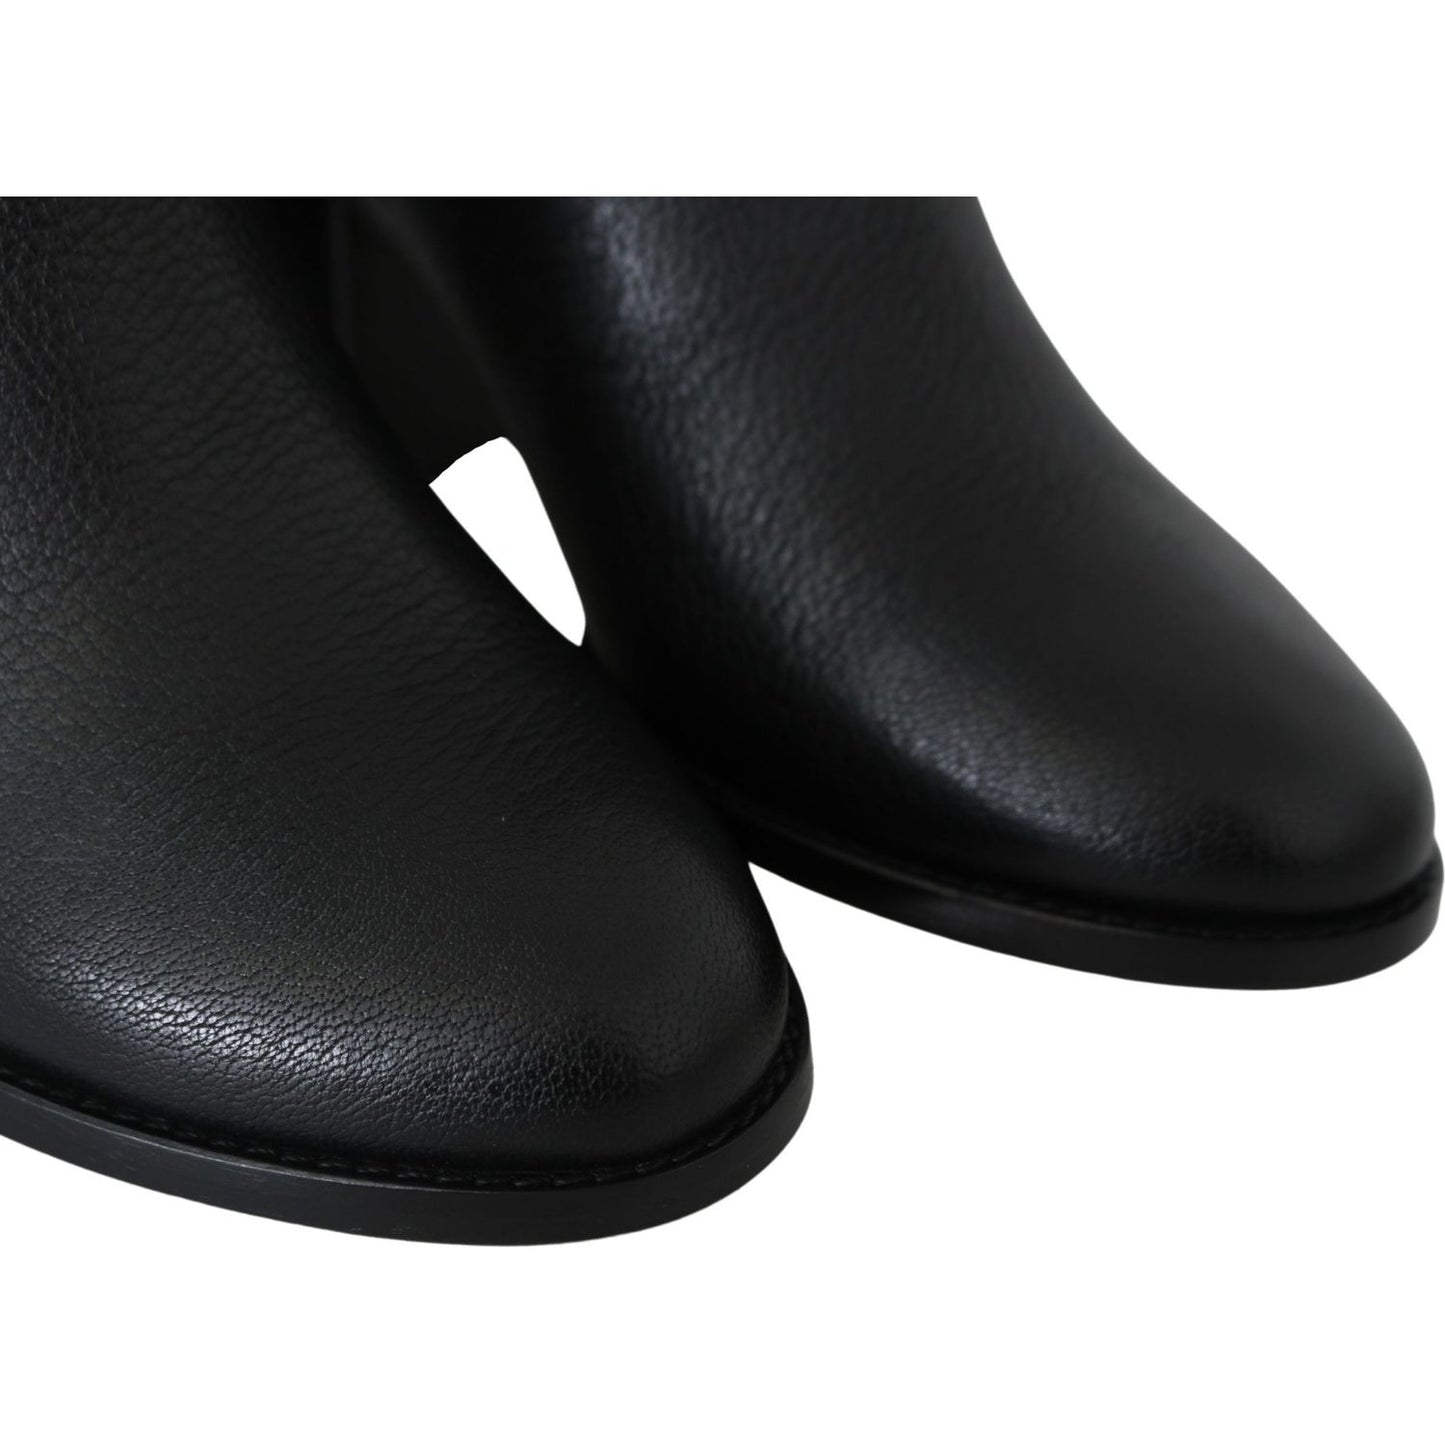 Jimmy Choo Elegant Black Leather Heeled Boots black-leather-method-65-boots